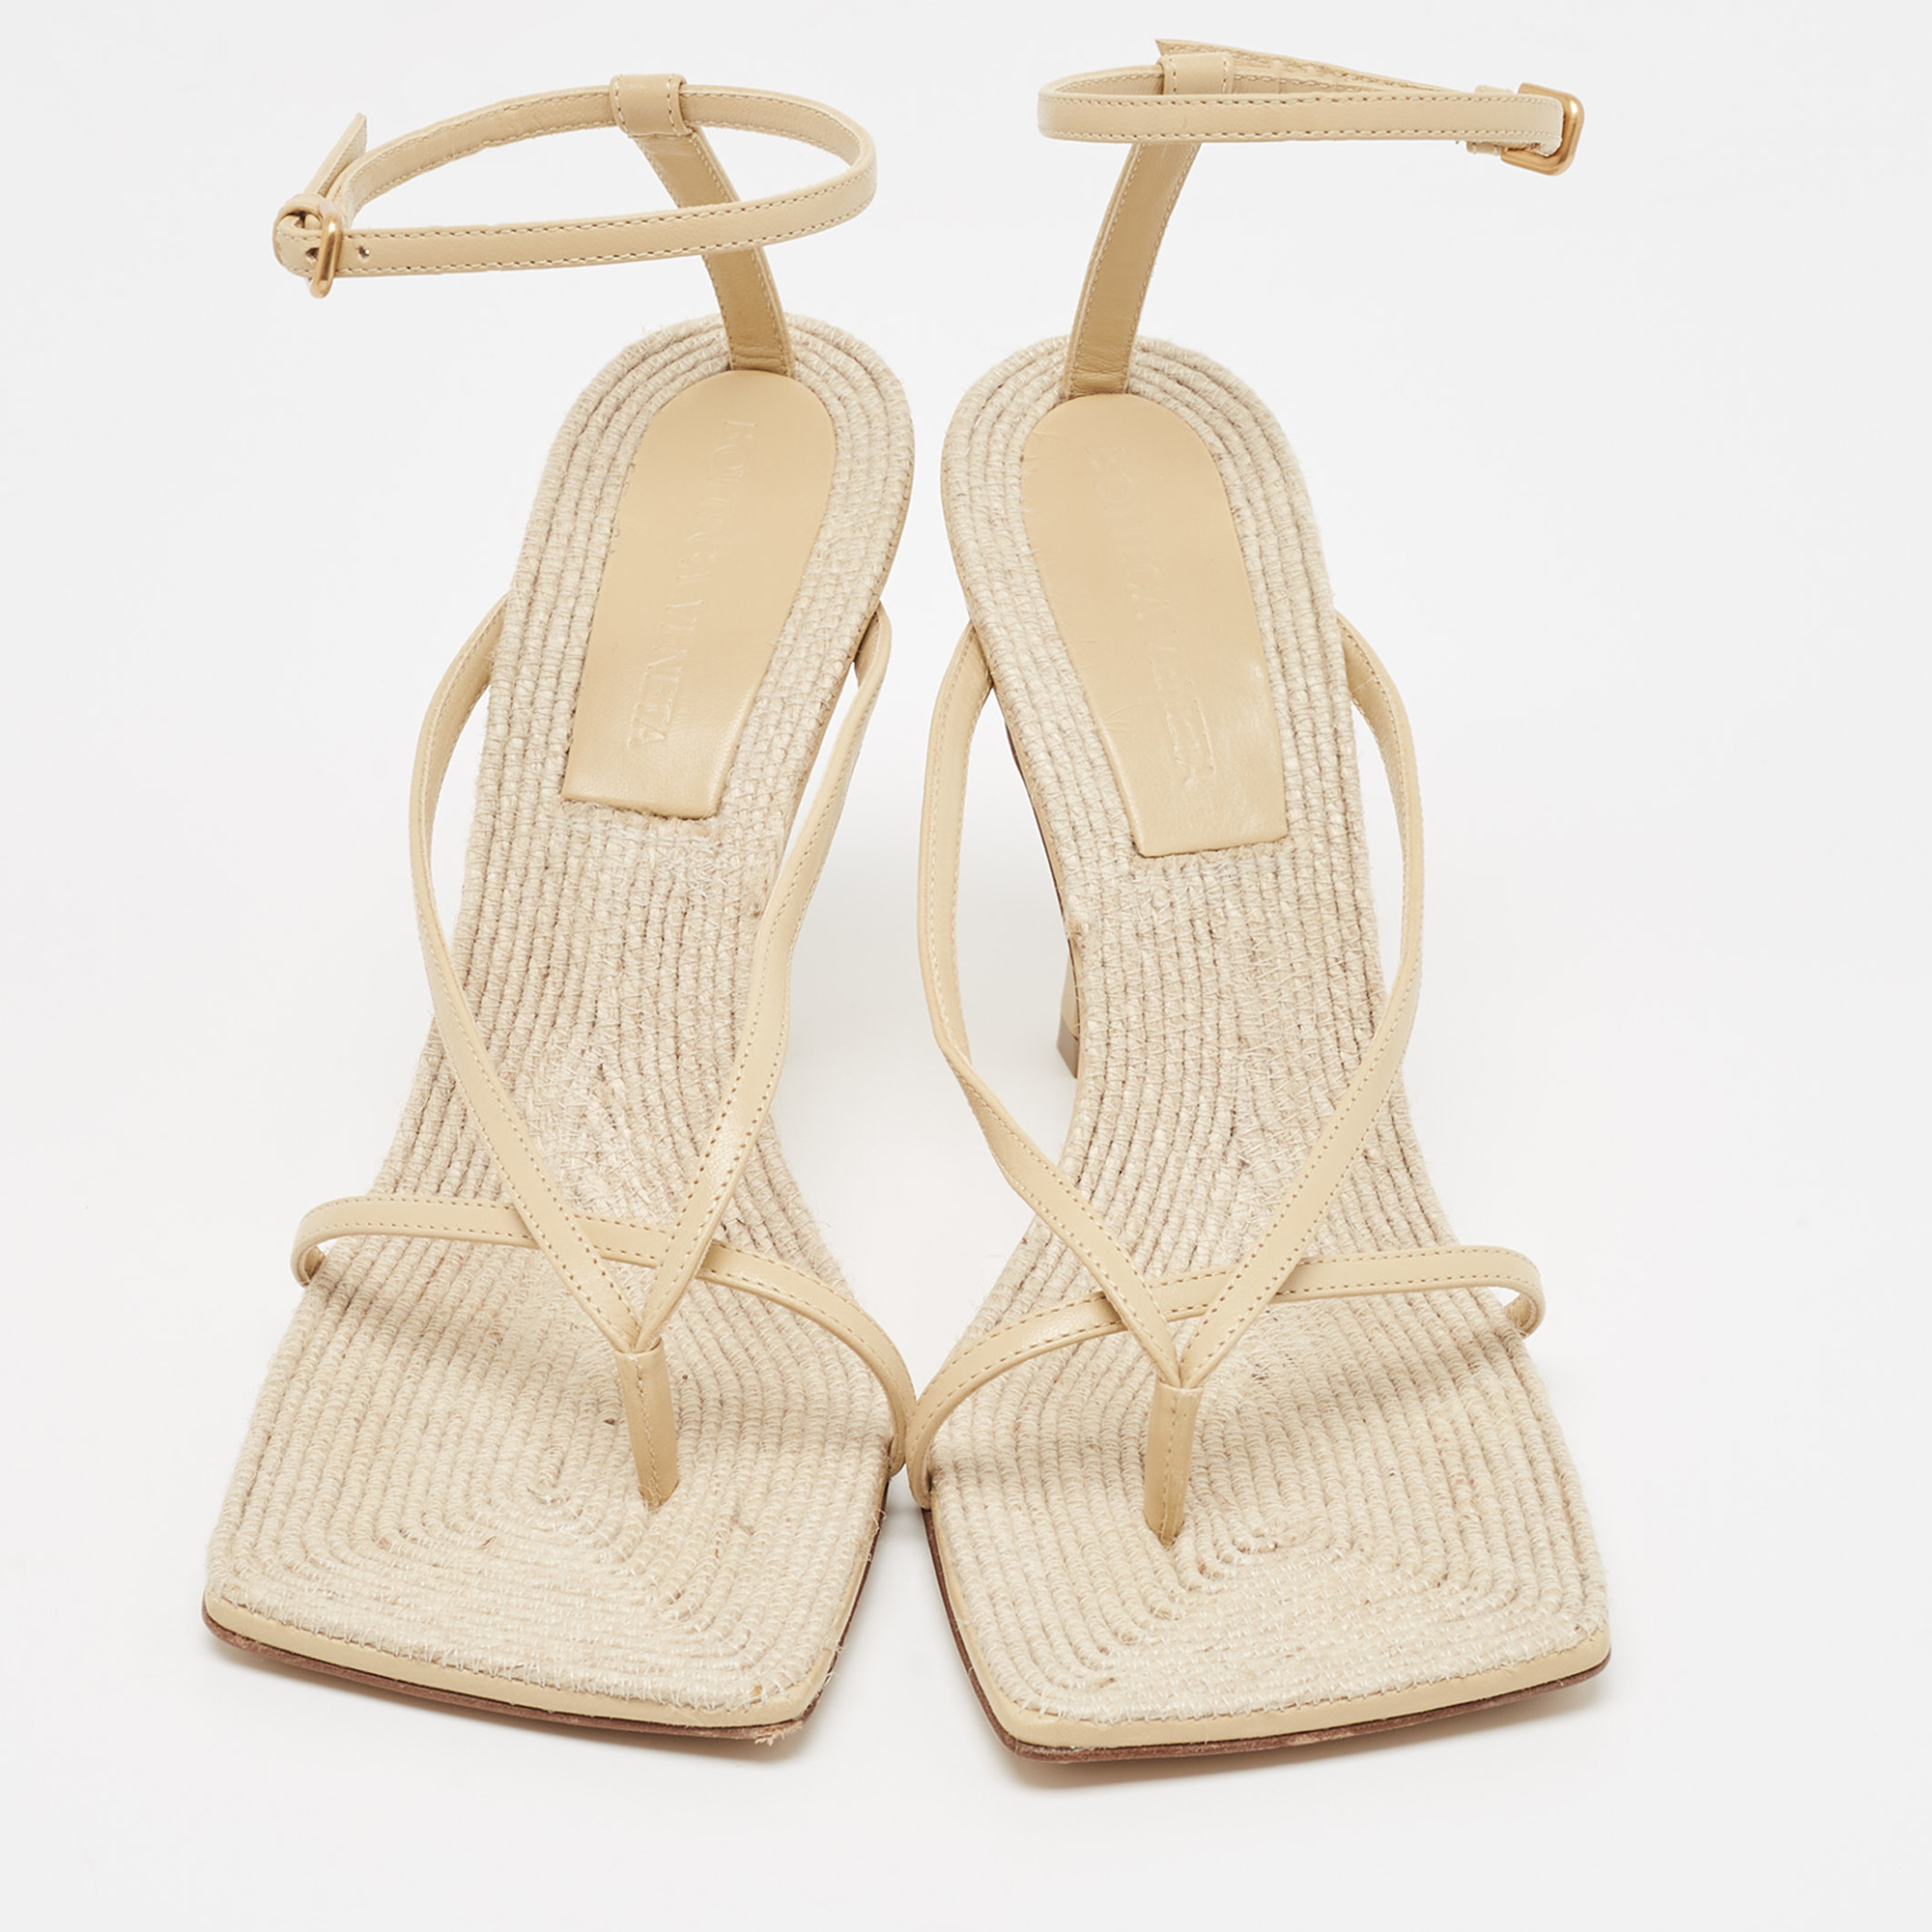 Bottega Veneta Cream Leather Stretch Ankle Strap Sandals Size 37.5